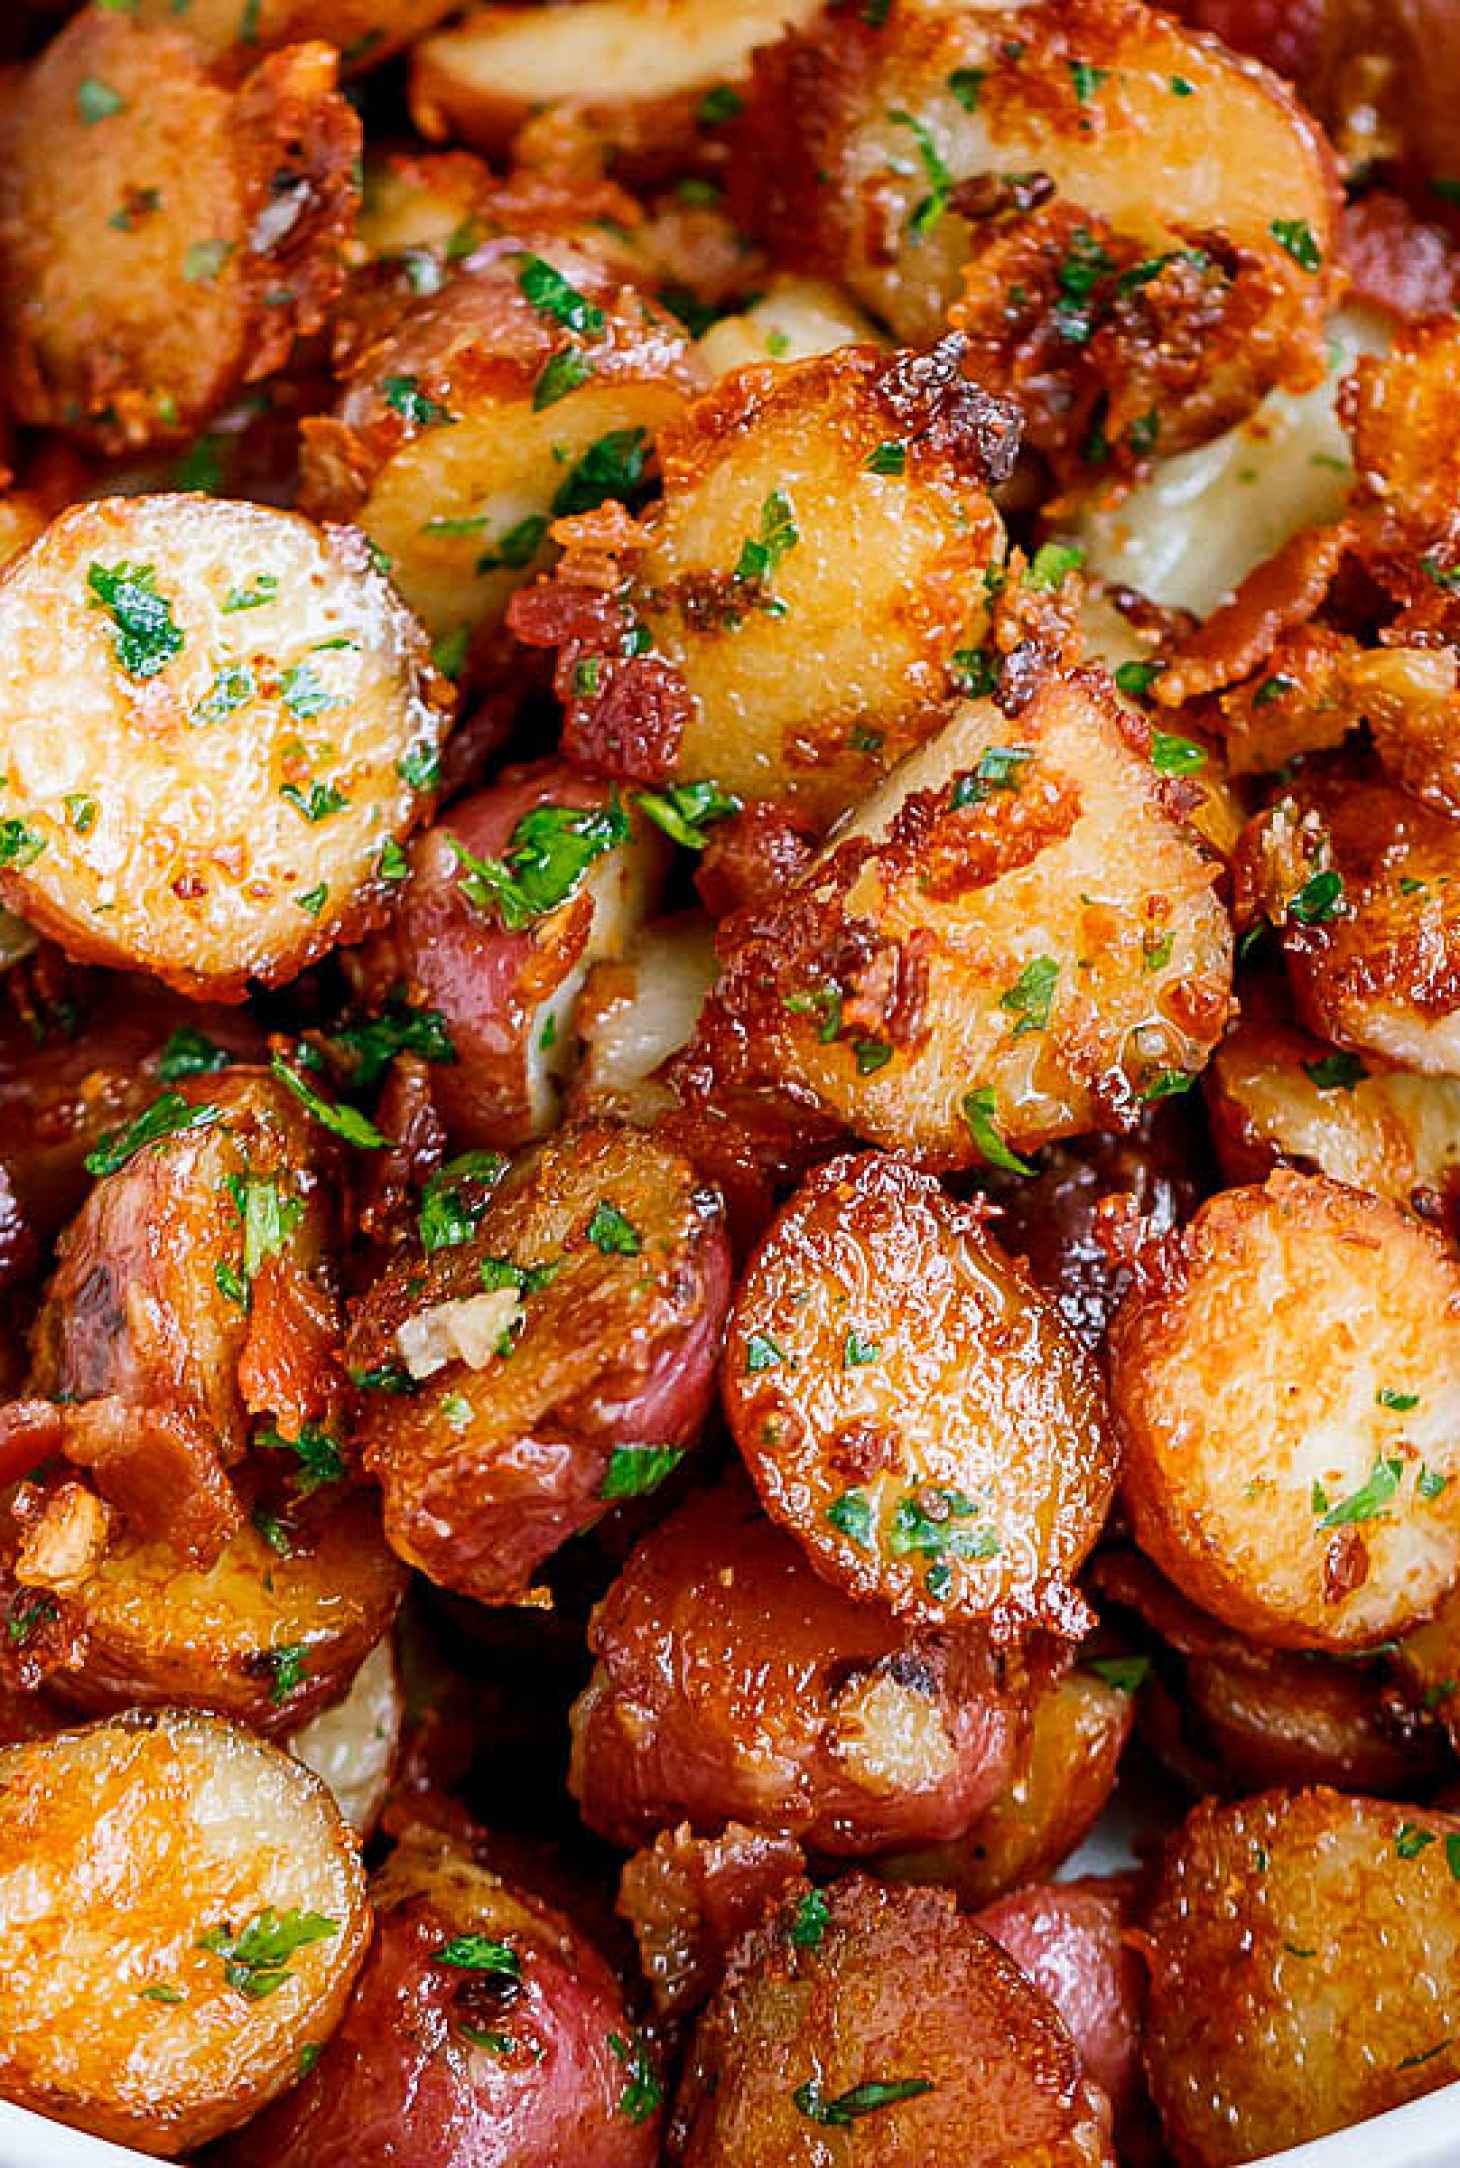 Potato Side Dish Recipes: 12 of the Best Potato Recipes — Eatwell101